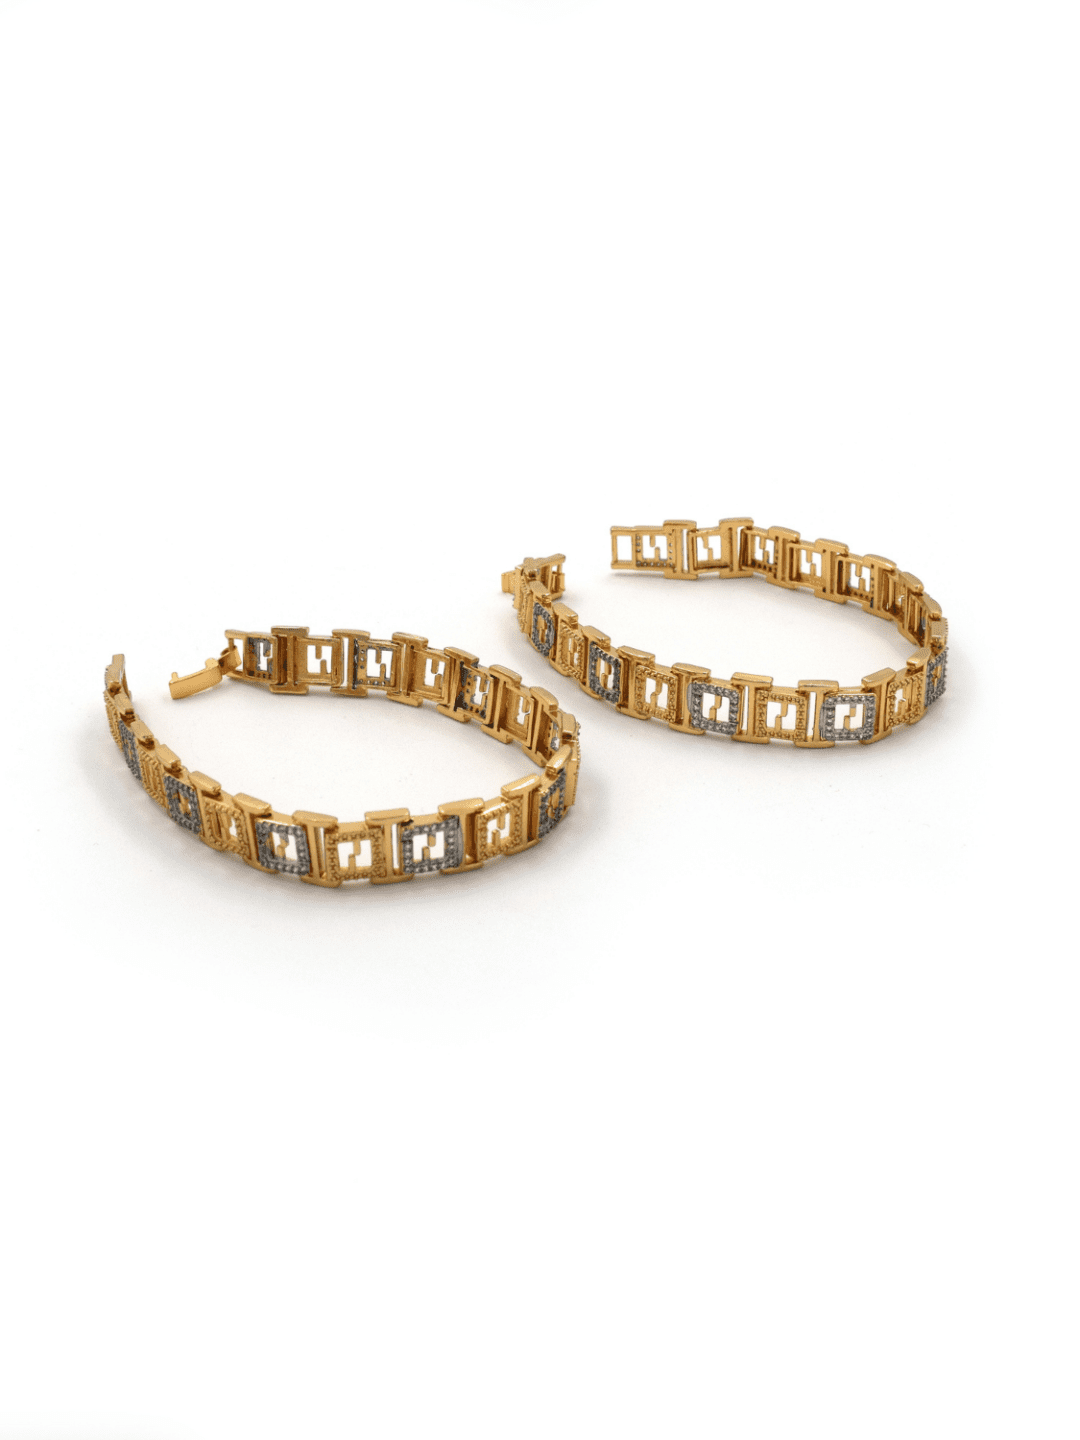 Gold & Silver Square Block Look Alike Open Clasp Bracelet